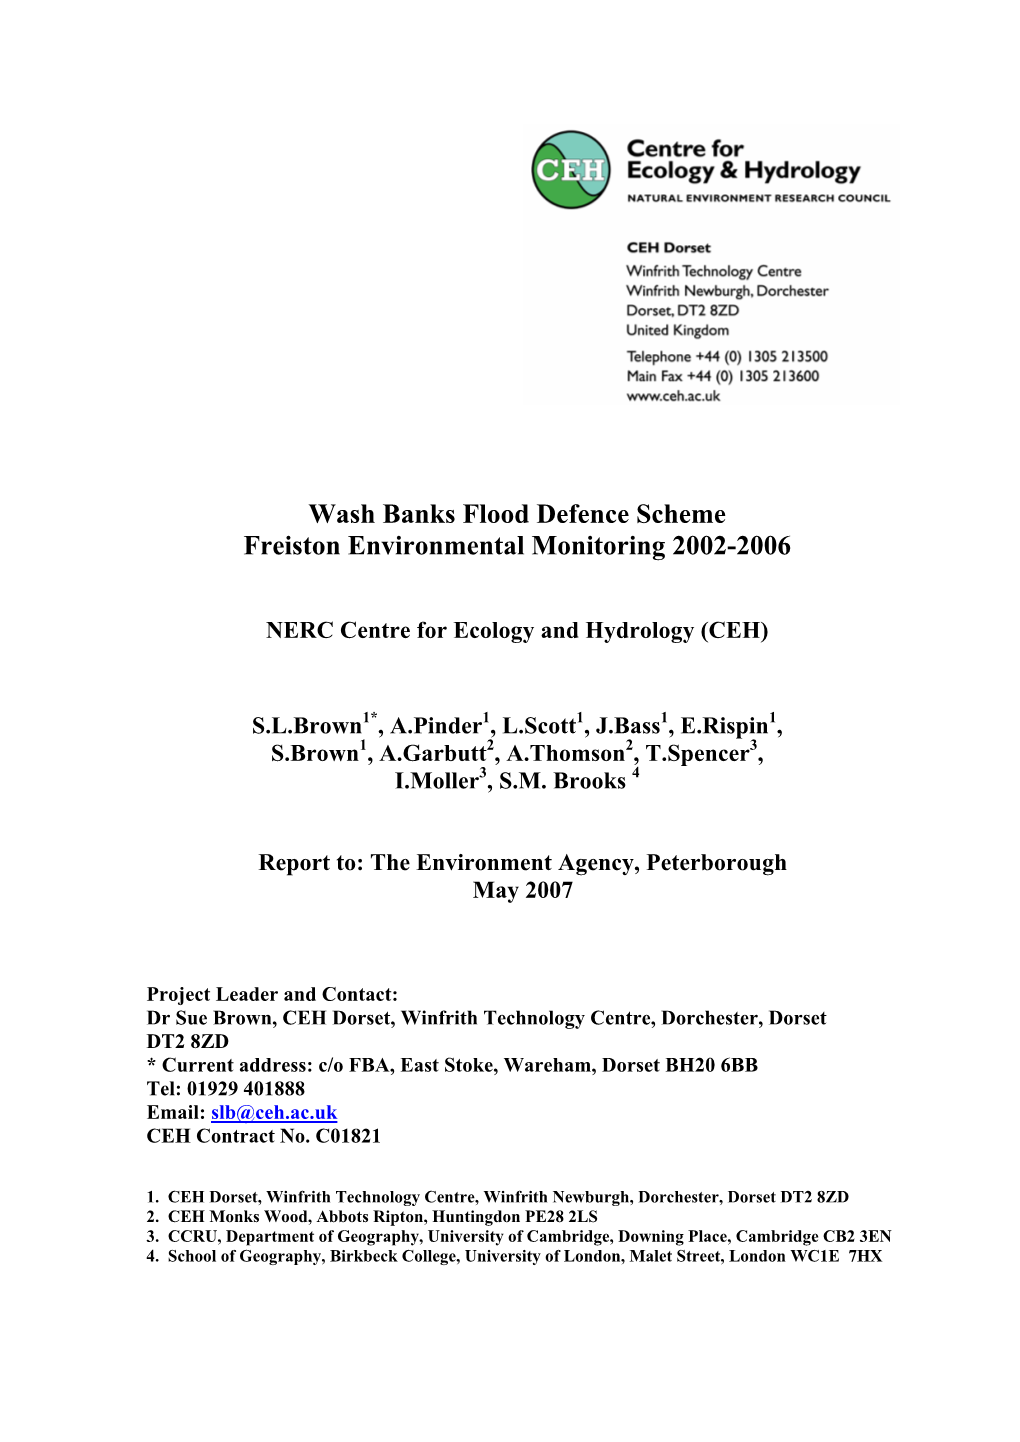 Wash Banks Flood Defence Scheme Freiston Environmental Monitoring 2002-2006